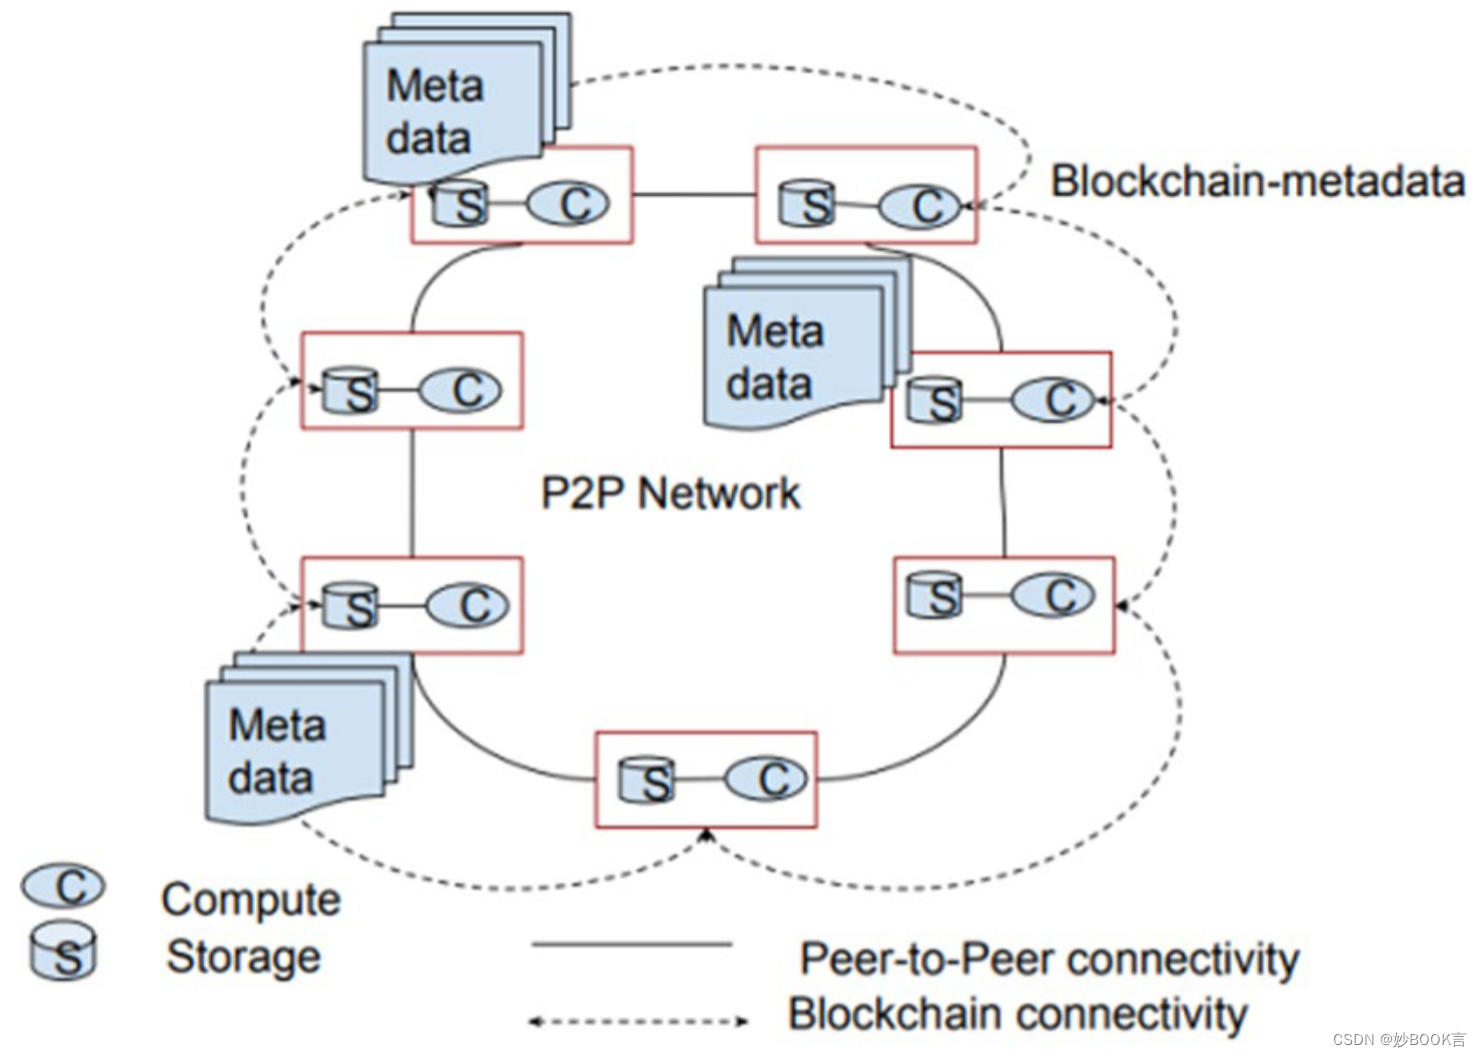 A Novel Distributed File System Using Blockchain Metadata——论文泛读